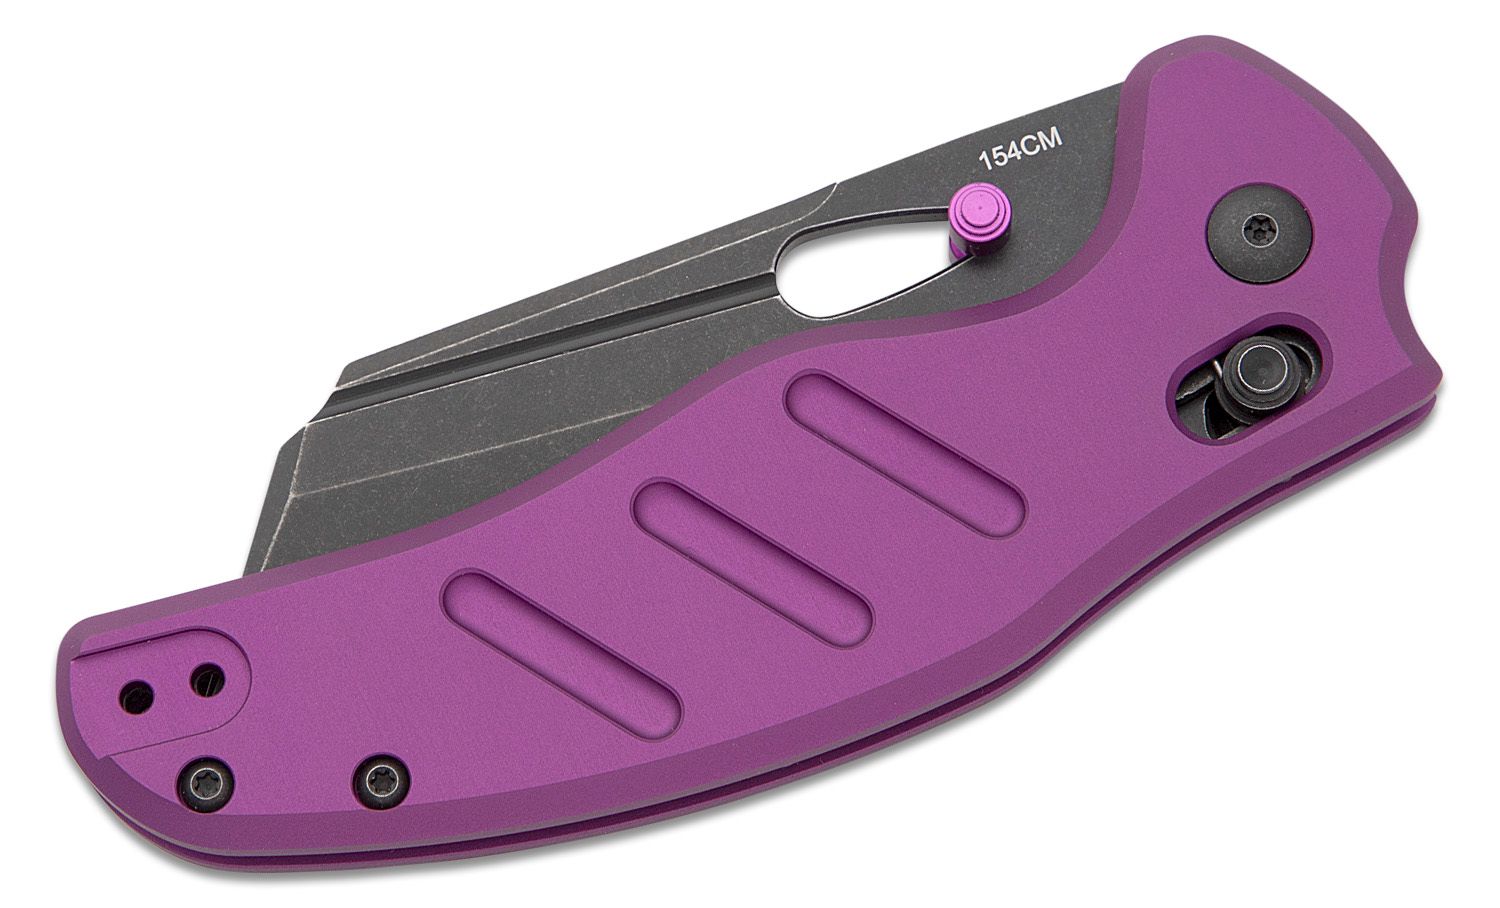 Kizer C01C Sheepdog EDC Knife Purple Aluminium Handle Pocket Knife